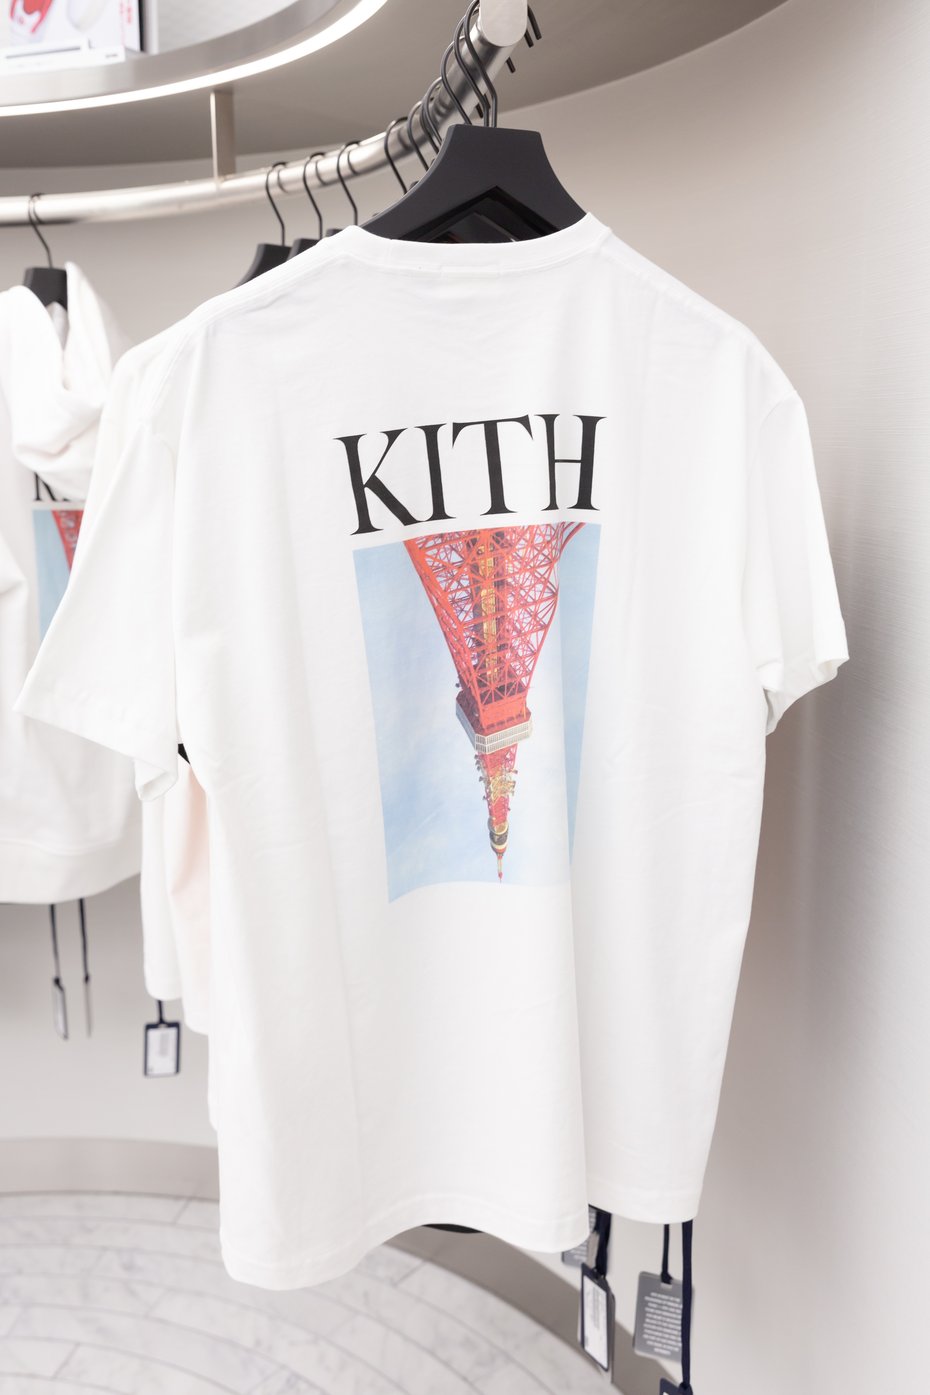 Kith Tokyo opening 限定 富士山 Tシャツ mt Fuji | www.yokecomms.com